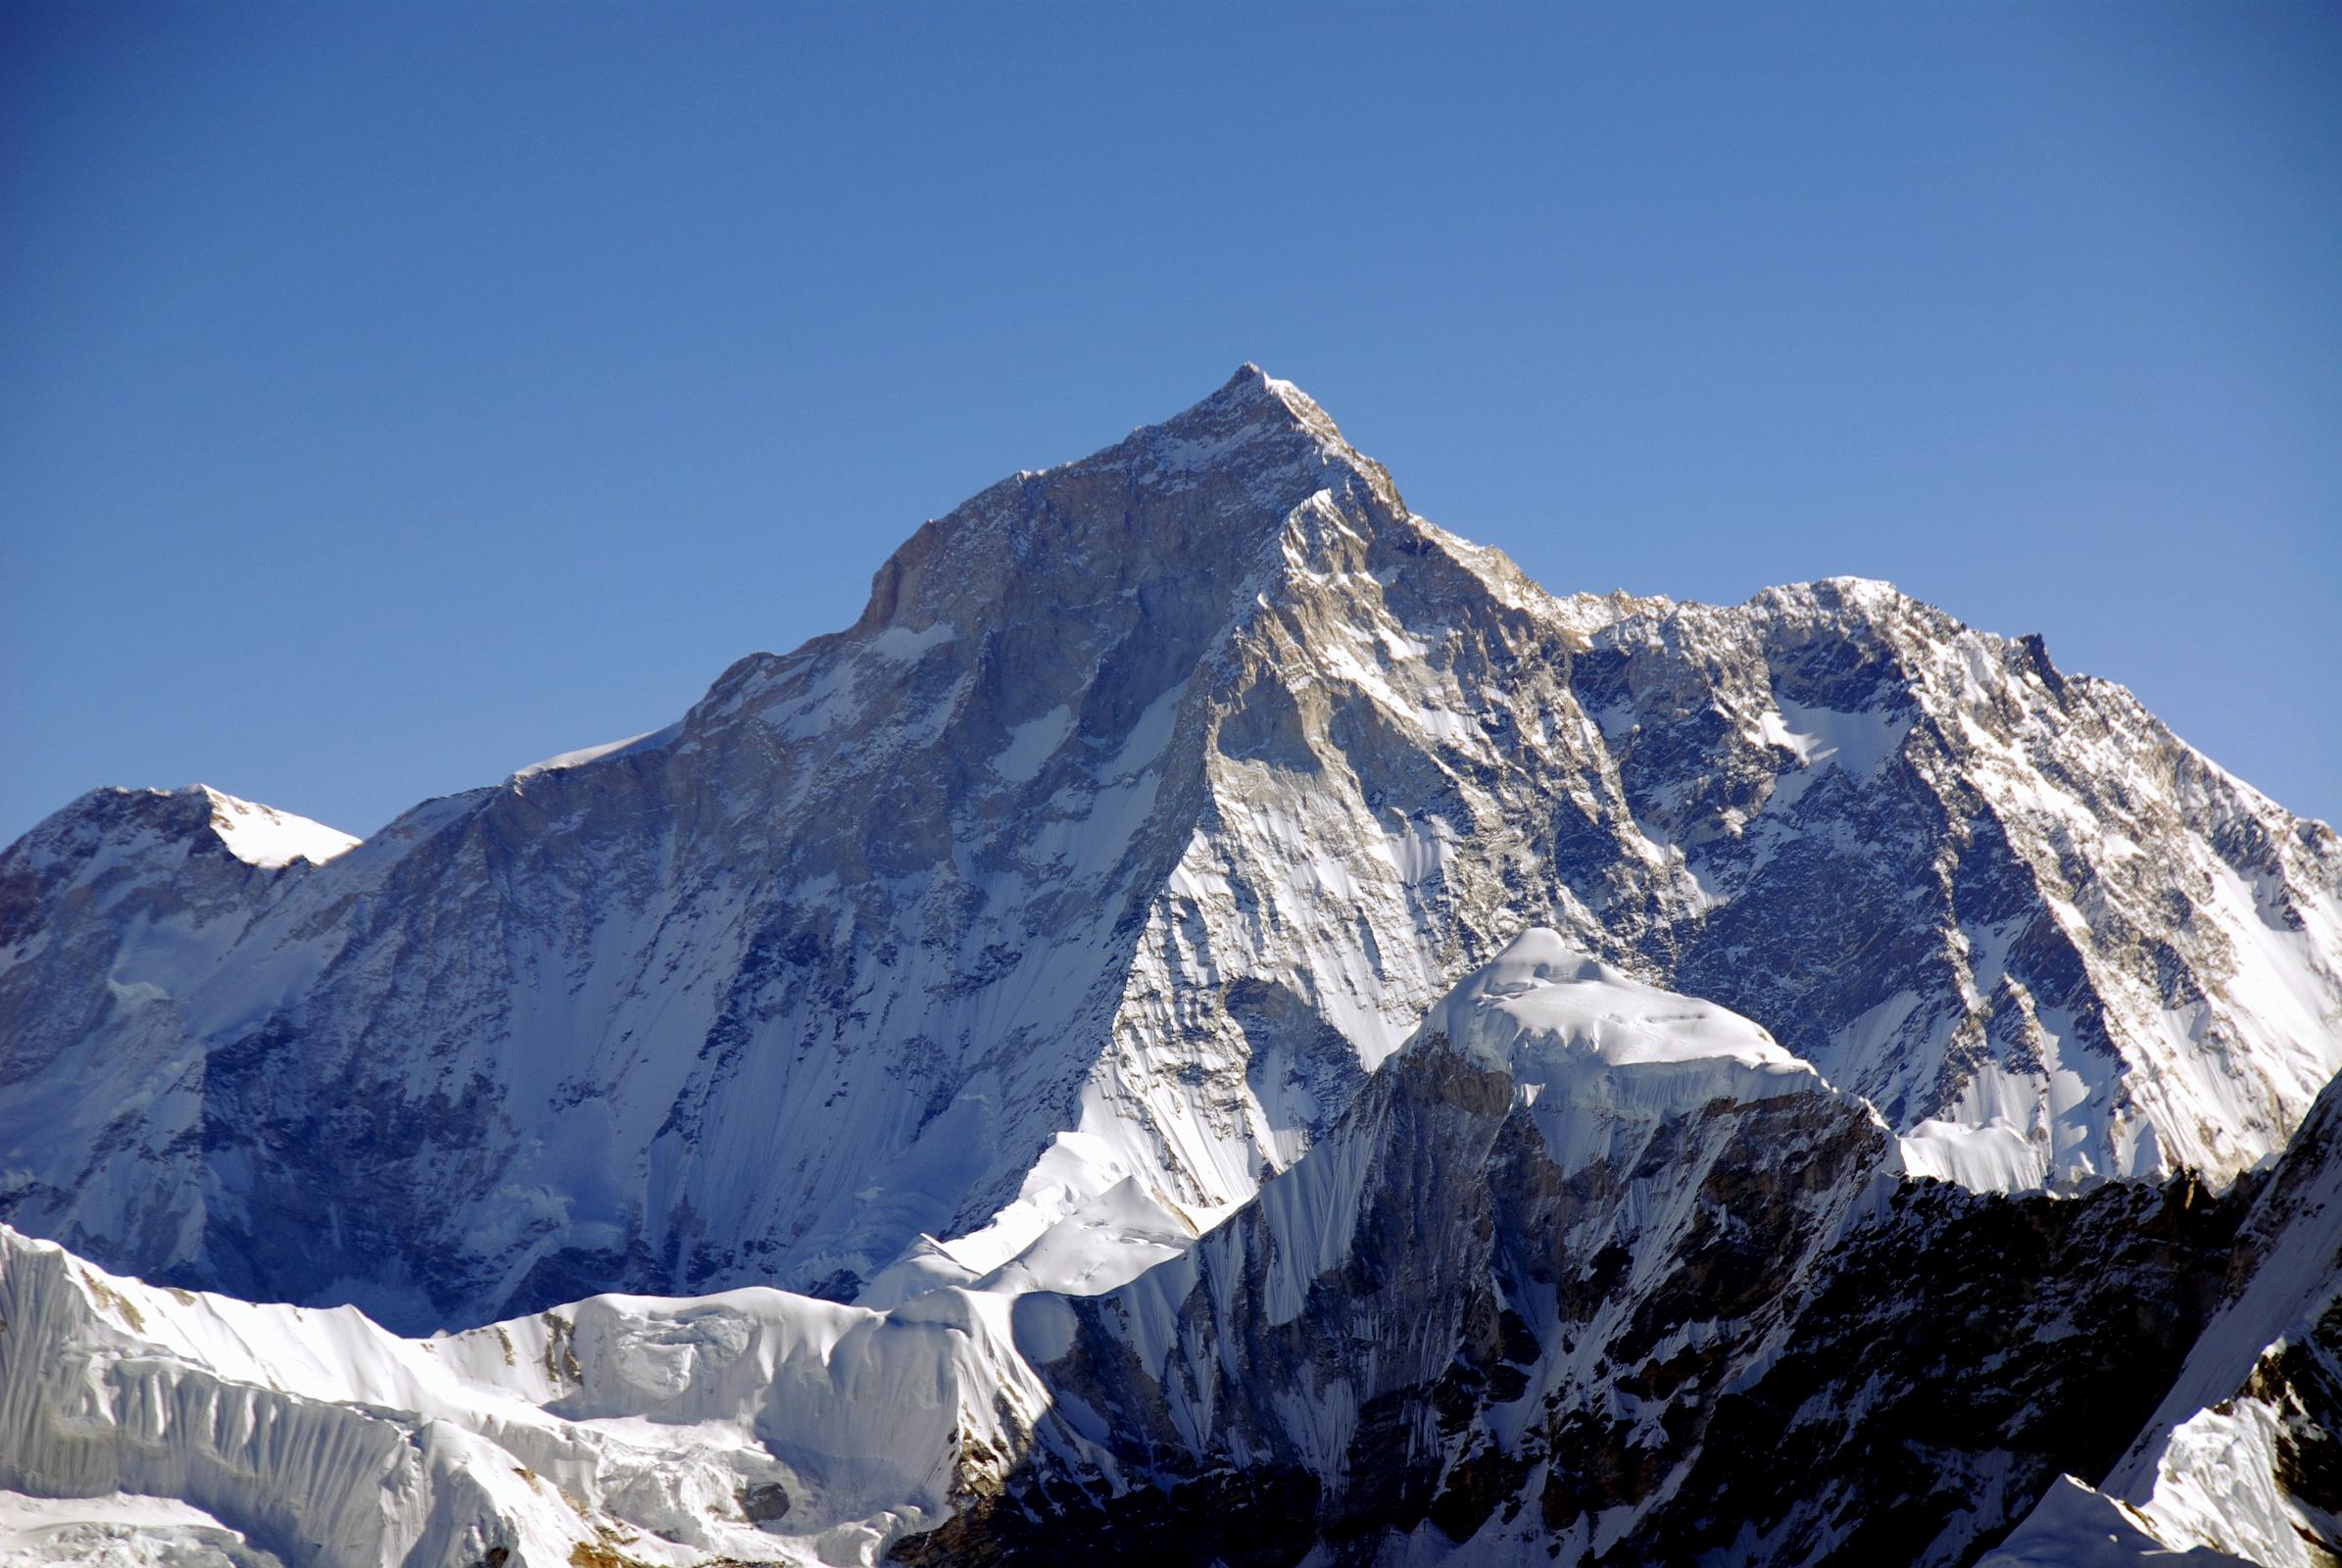 Наивысшая высота гималаев. Гималаи Эверест. Макалу горы Непала. Гора Джомолунгма. Джомолунгма (Гималаи) - 8848.